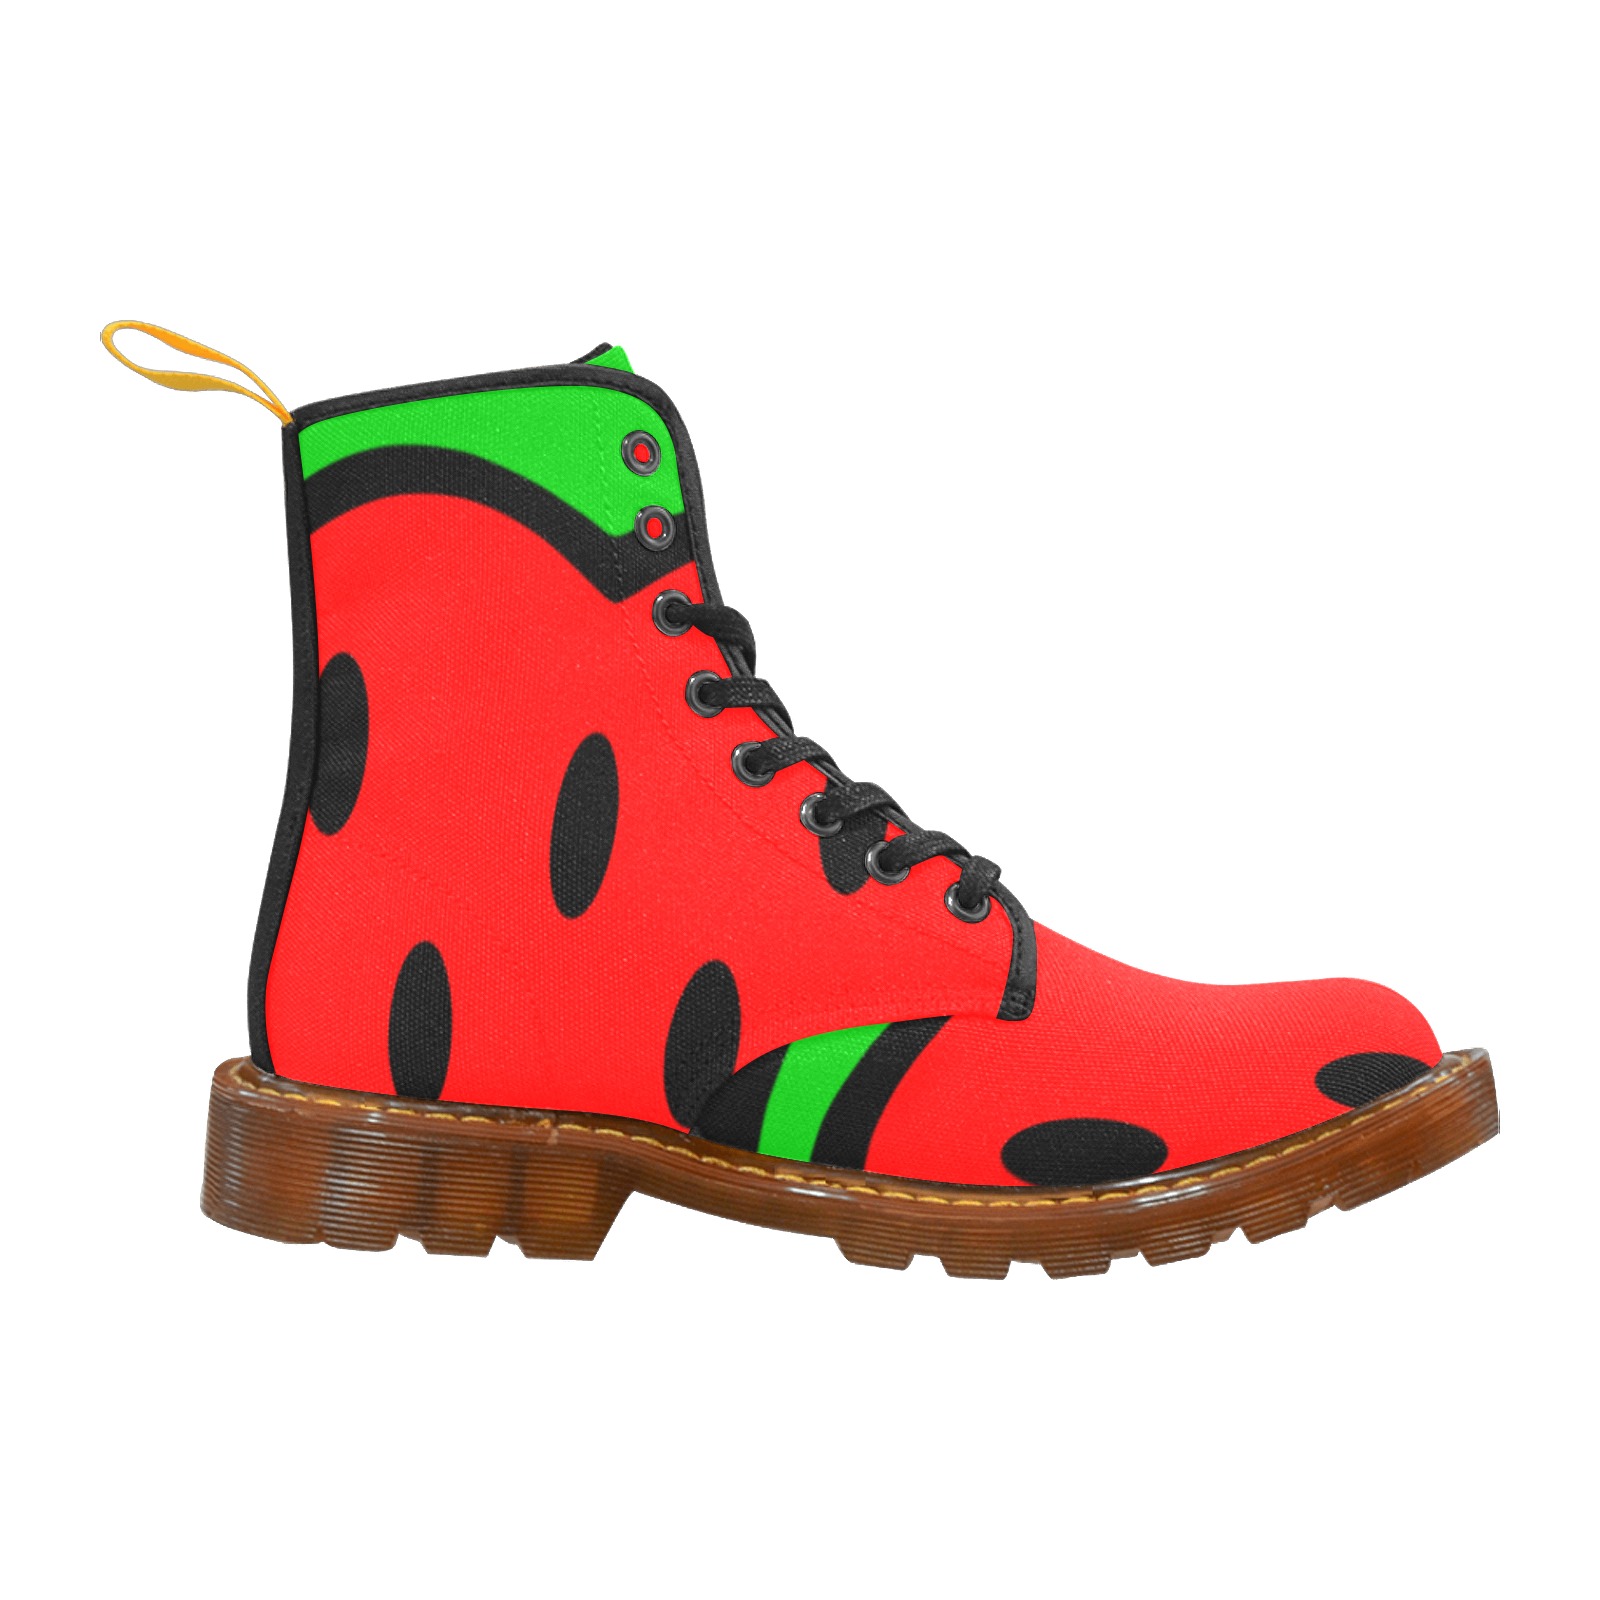 Strawberry2 Martin Boots For Men Model 1203H